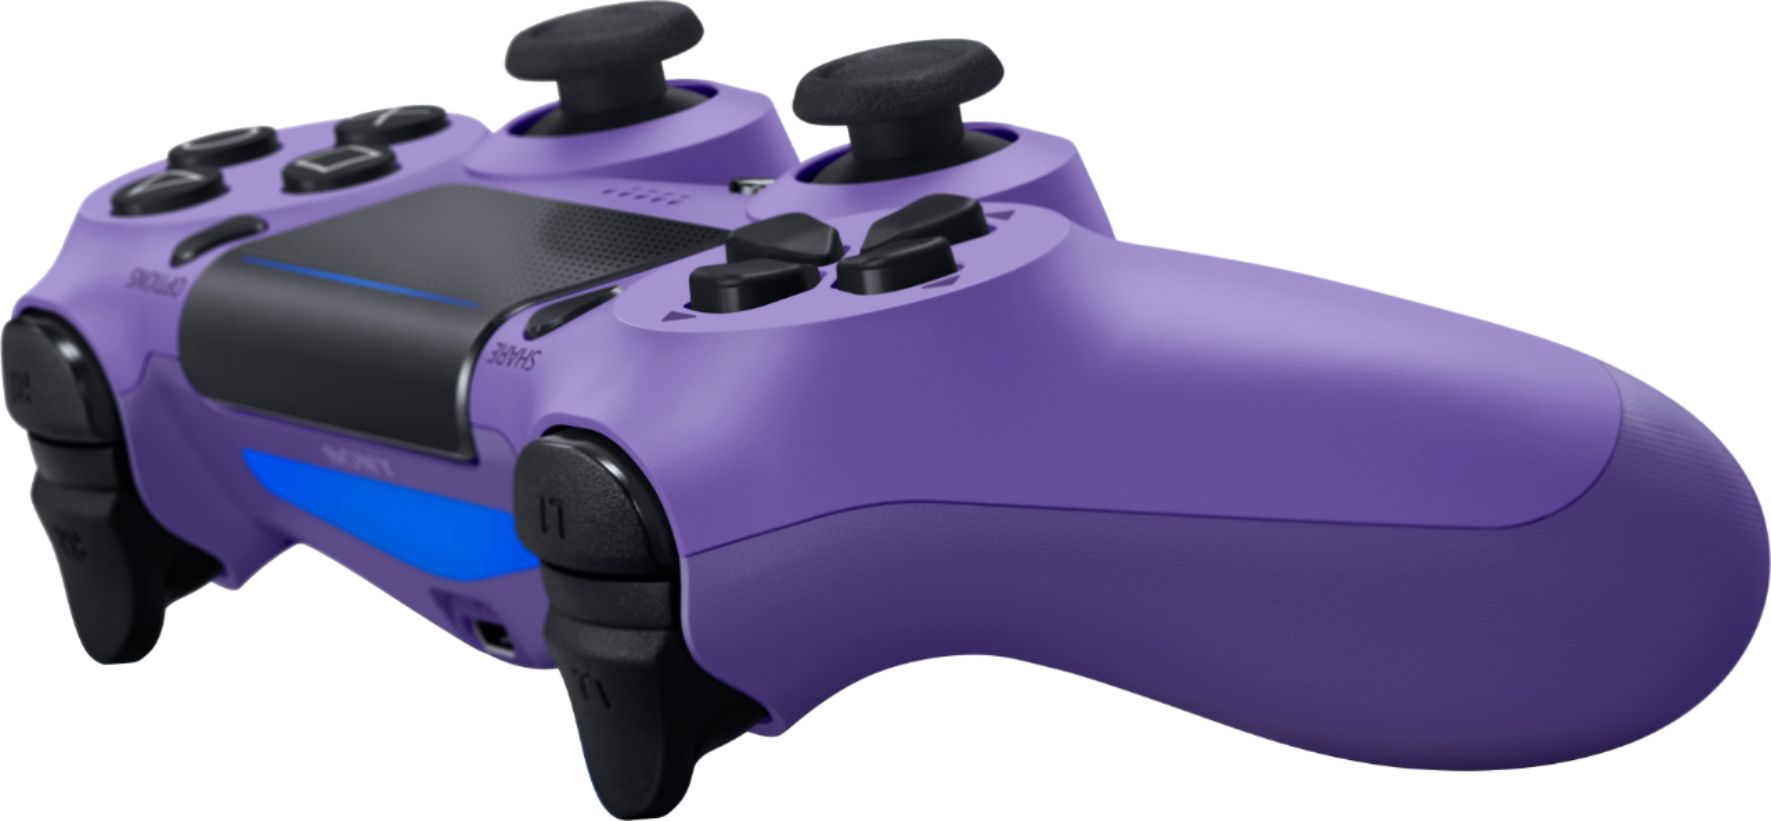 playstation dualshock 4 purple